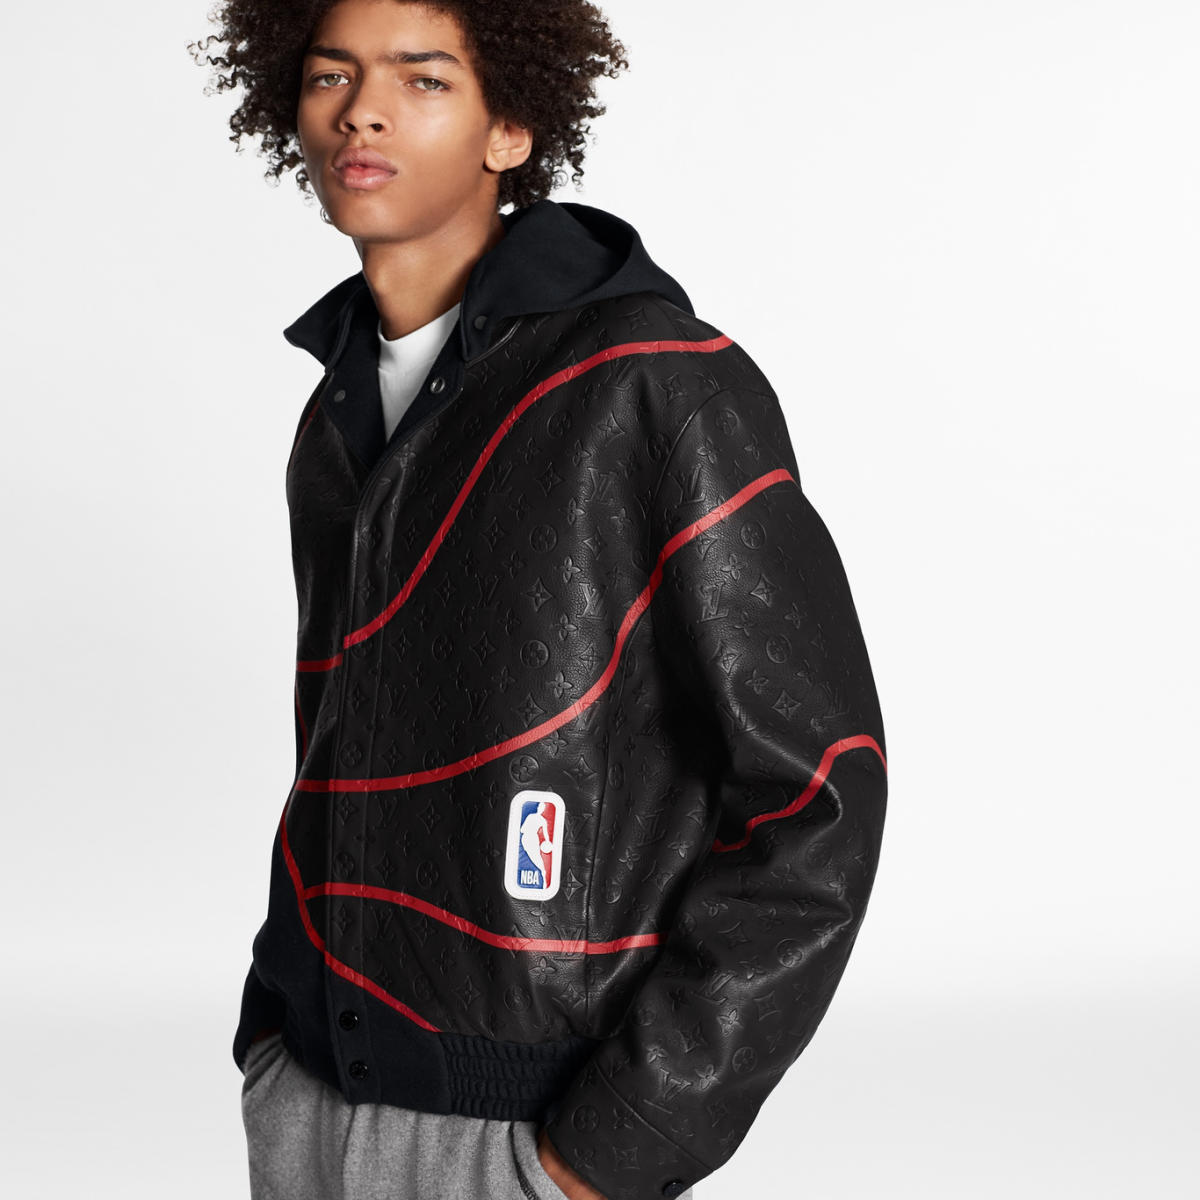 Louis Vuitton X NBA Black 50 Keepall – Tailored Styling